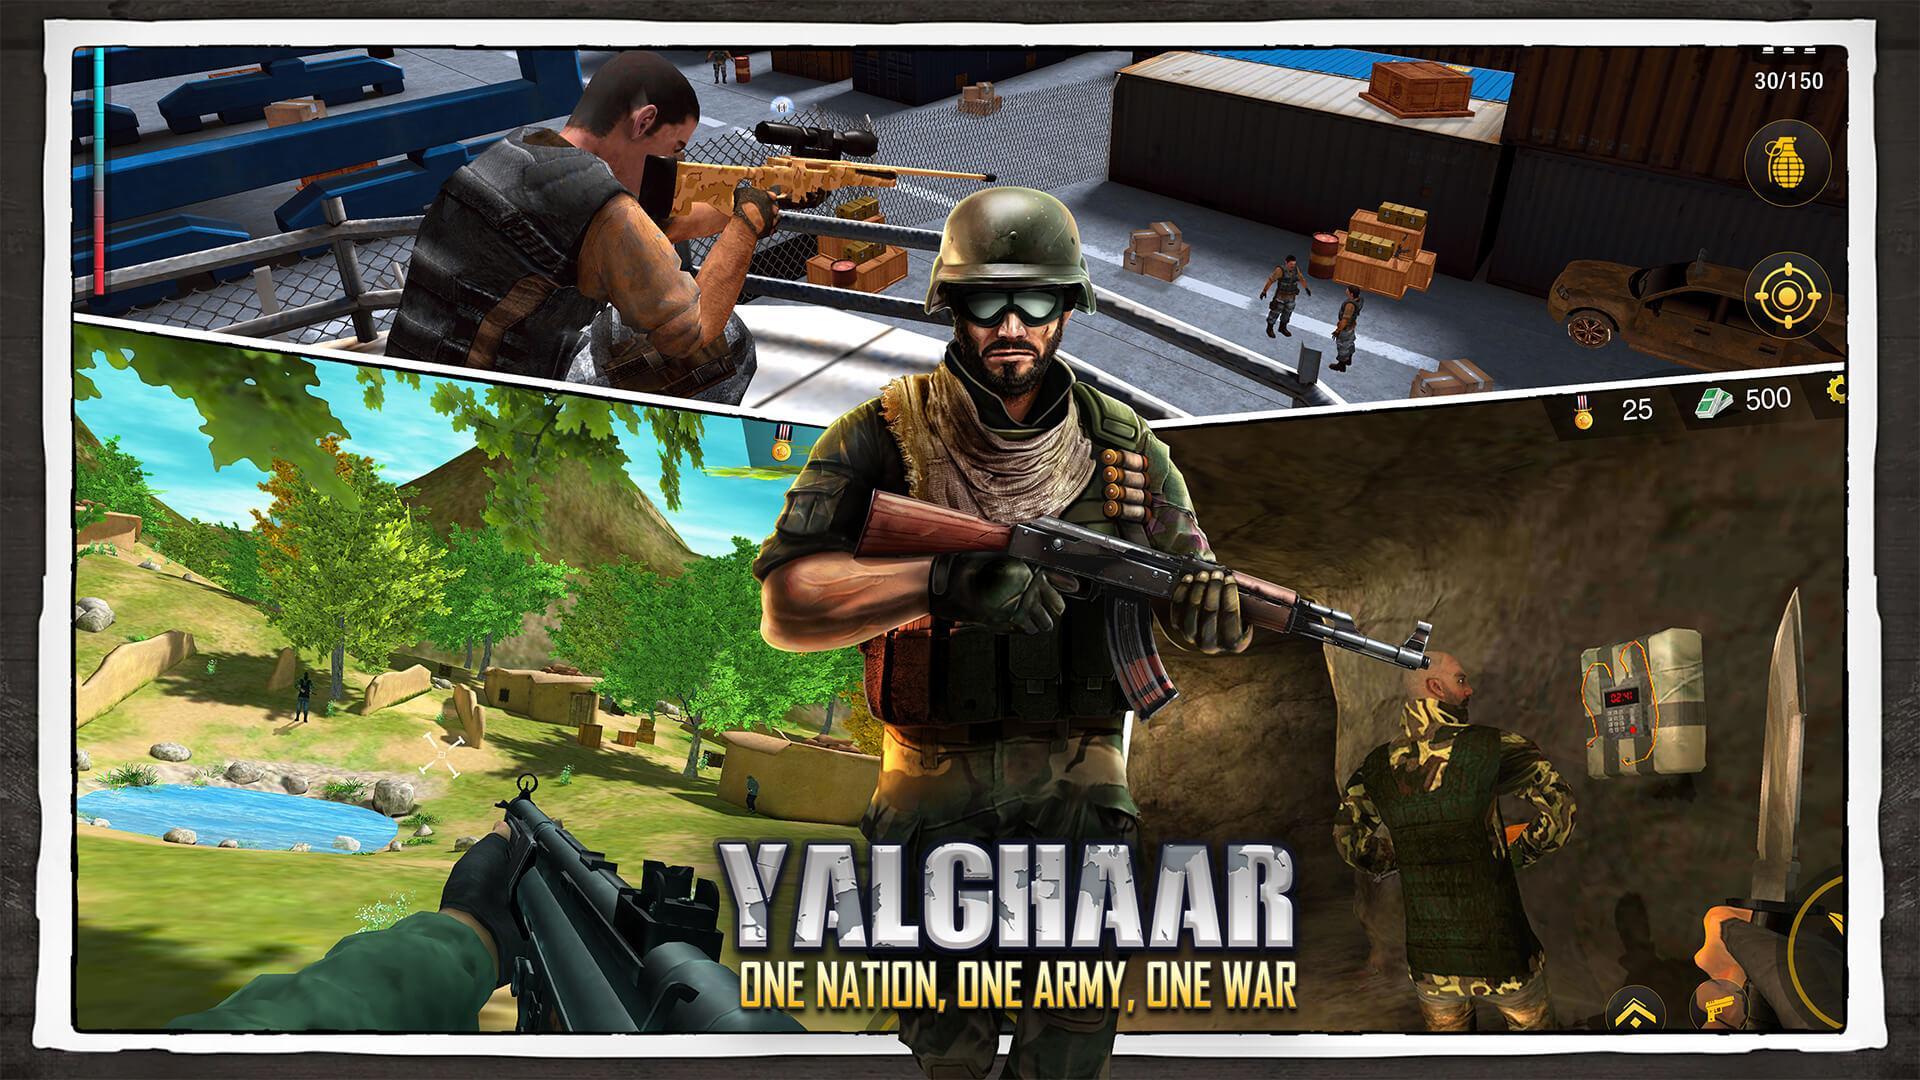 Yalghaar Delta IGI Commando Adventure Mobile Game 3.4 Screenshot 7